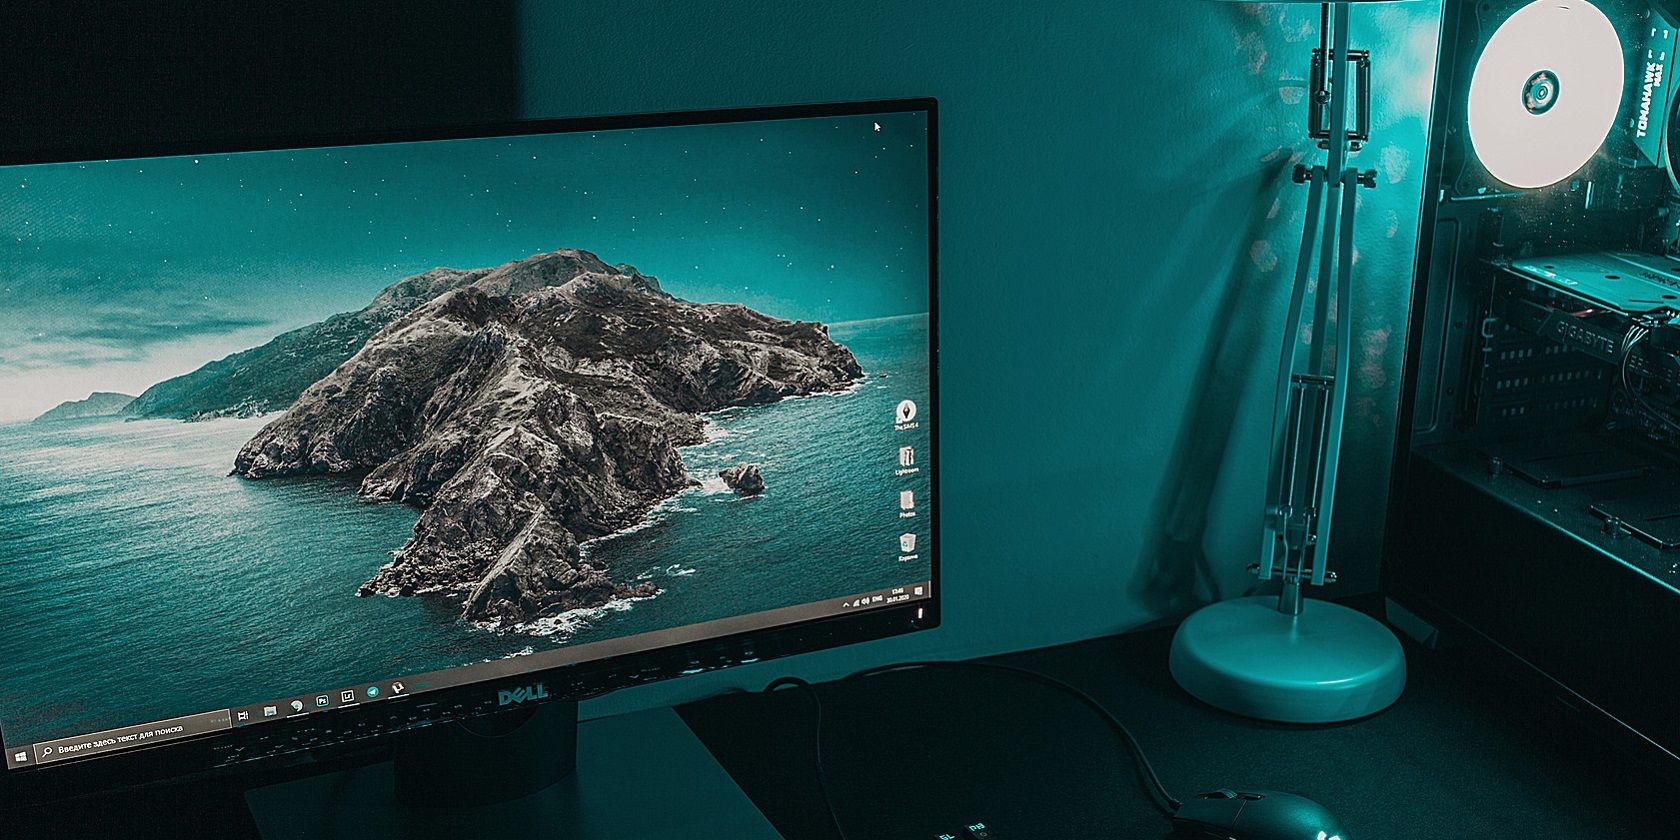 A desktop monitor